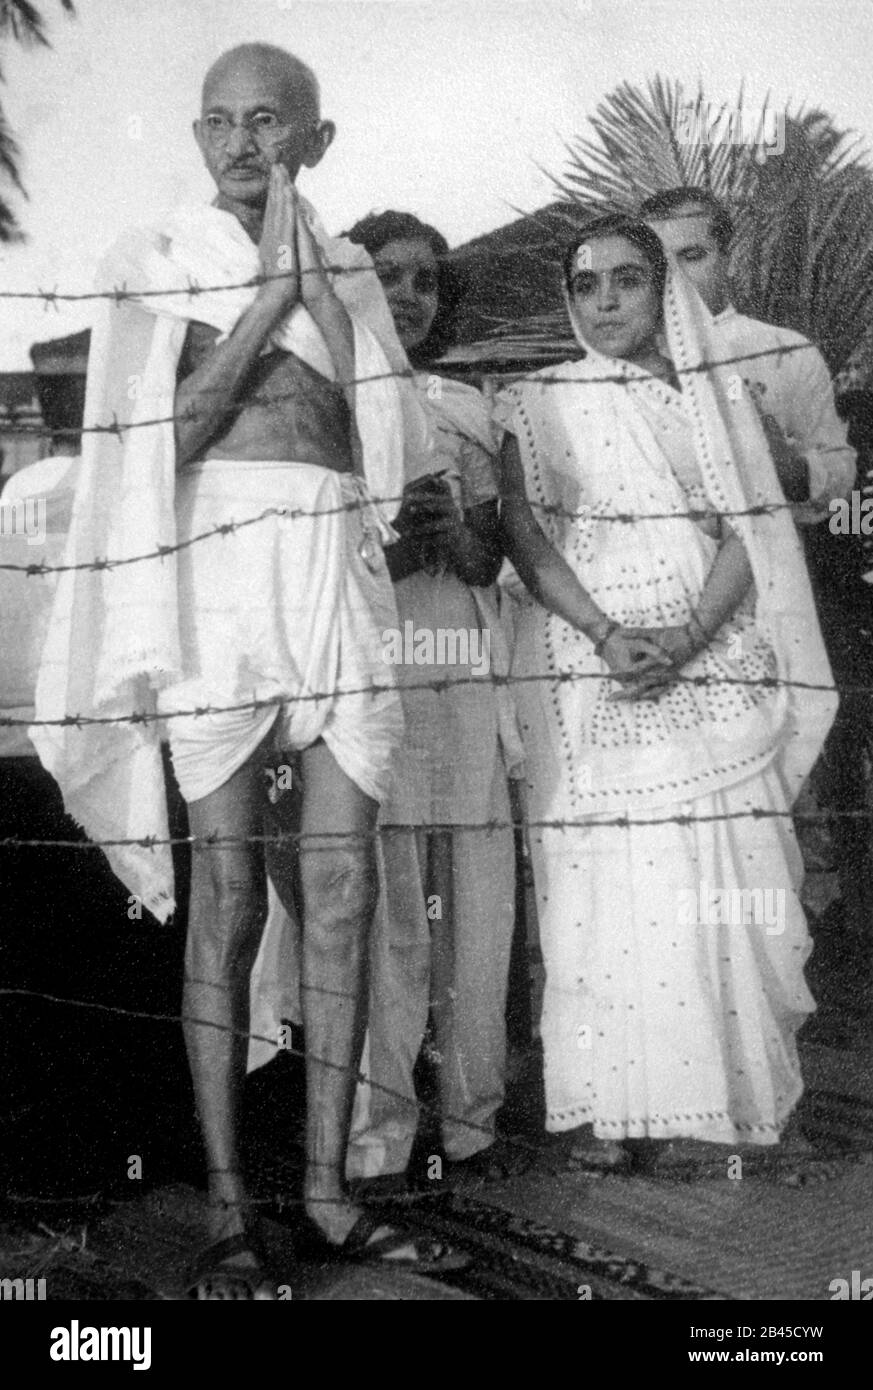 mahatma gandhi mit kasturba gandhi, Indien, Asien, 1921, alter Jahrgang 1900s Bild Stockfoto